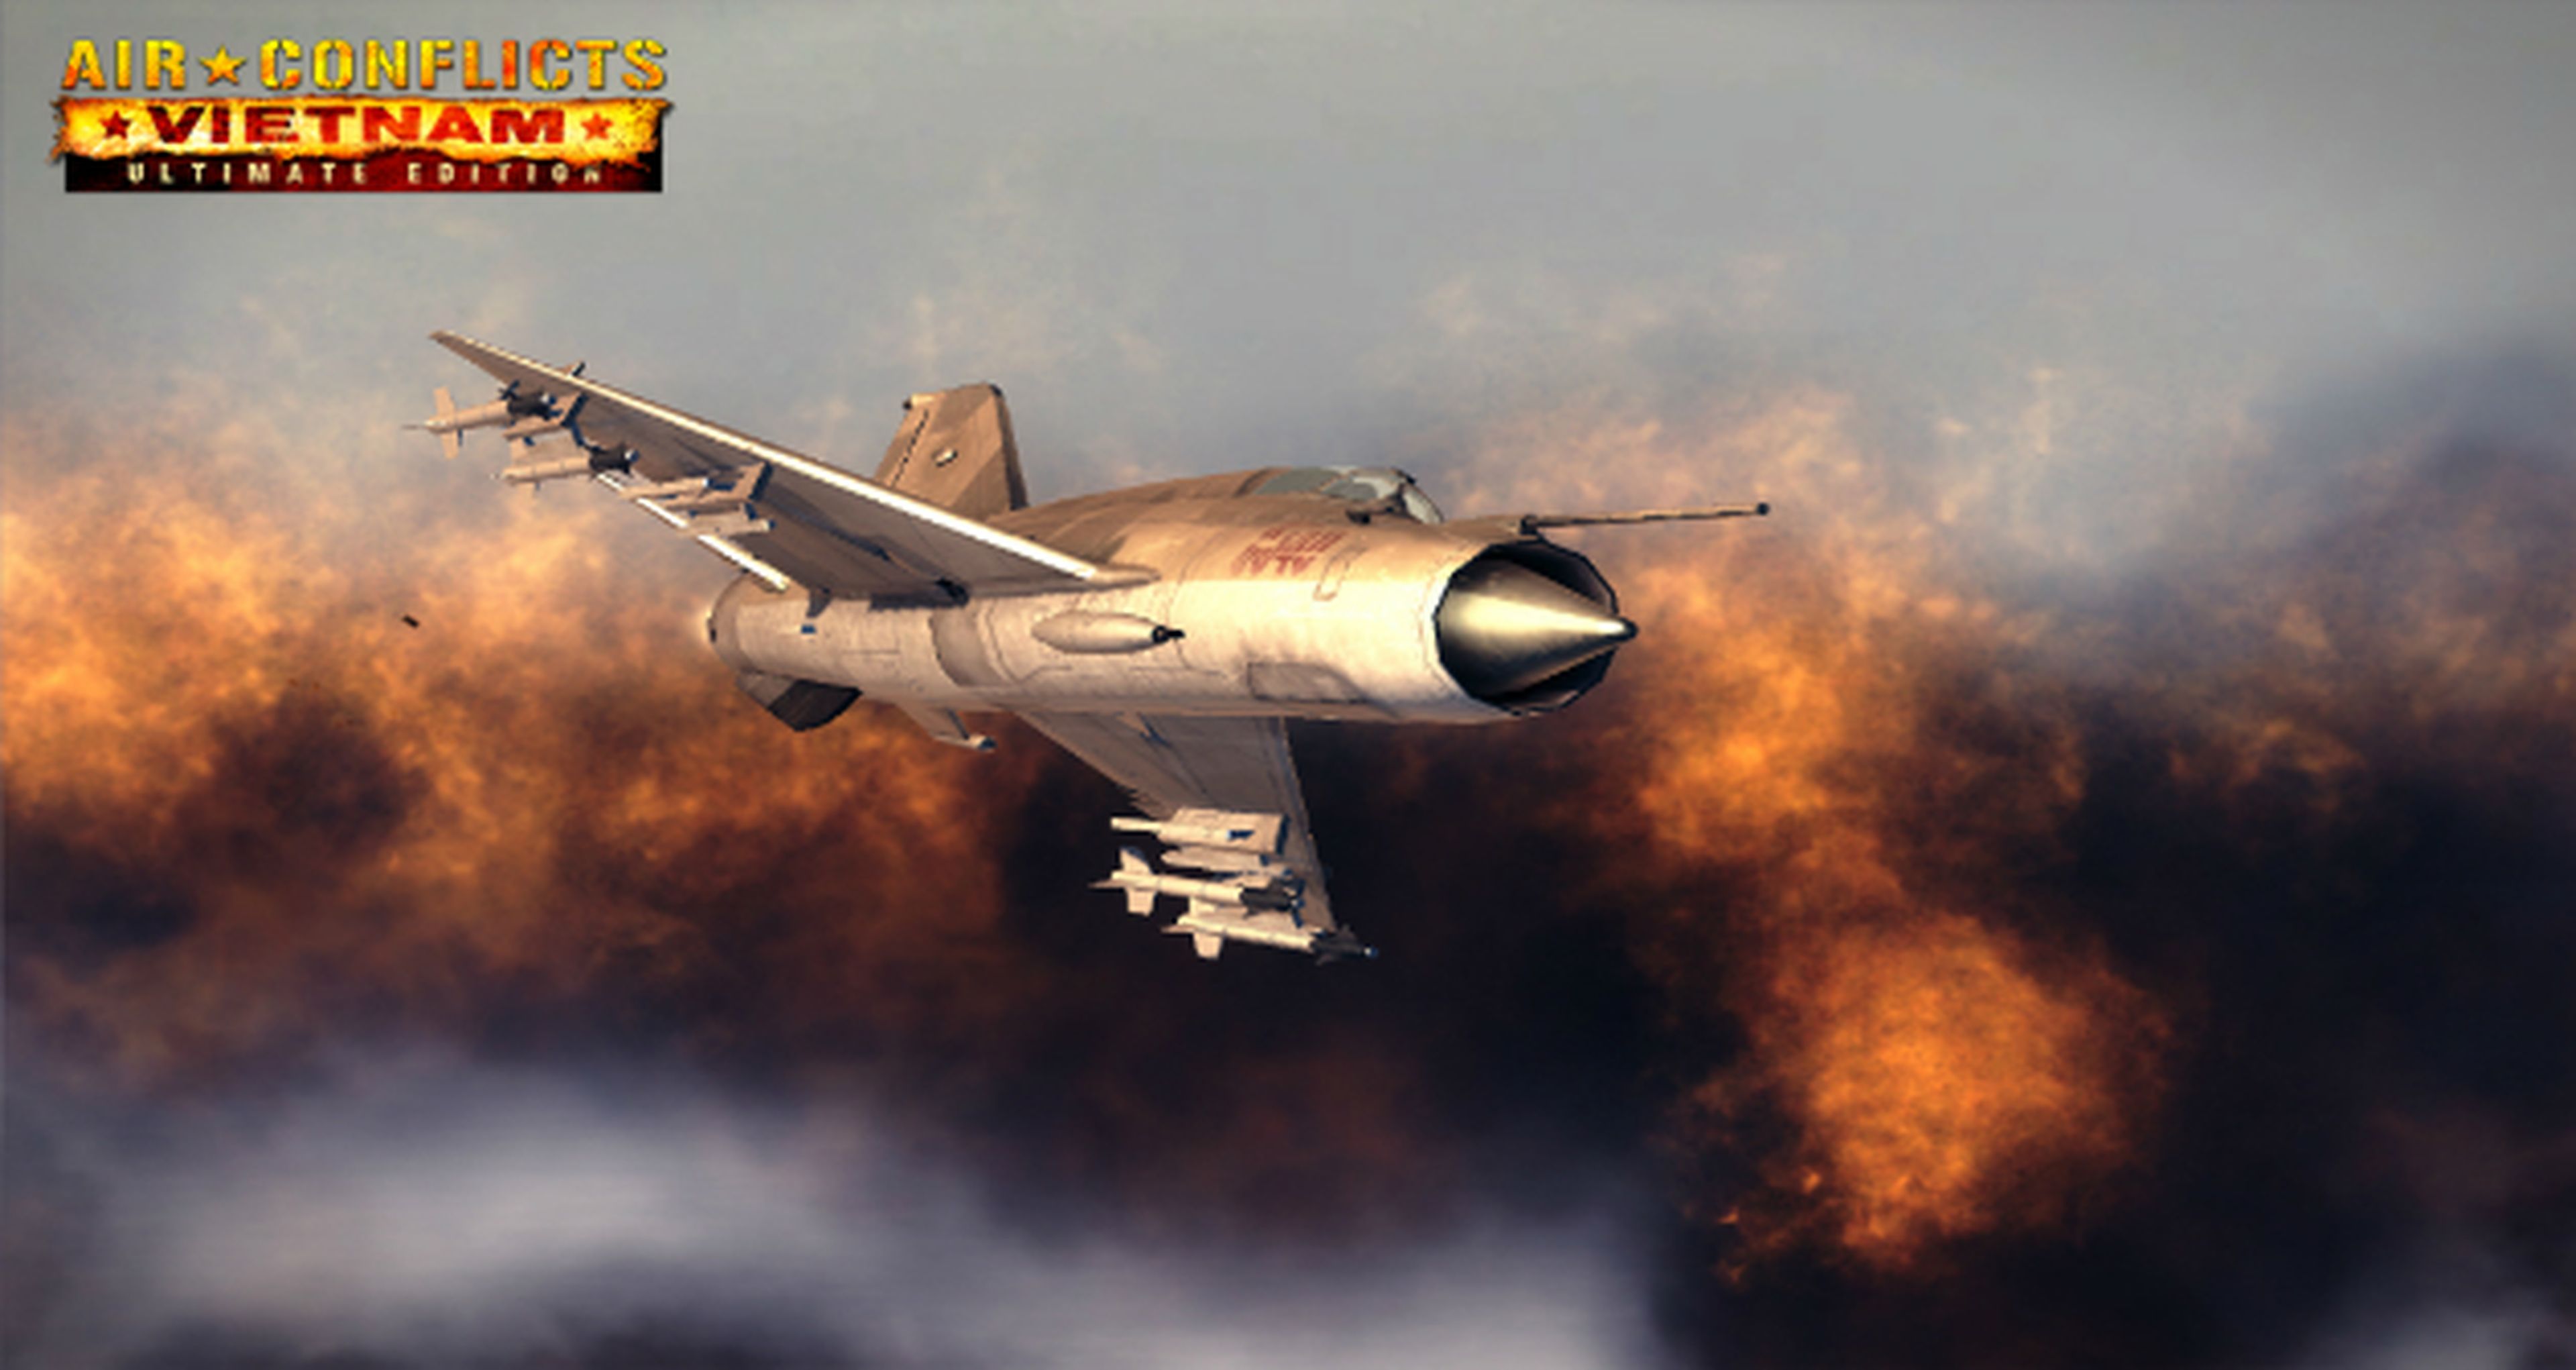 Air Conflicts Vietnam Ultimate Edition llegará a PS4